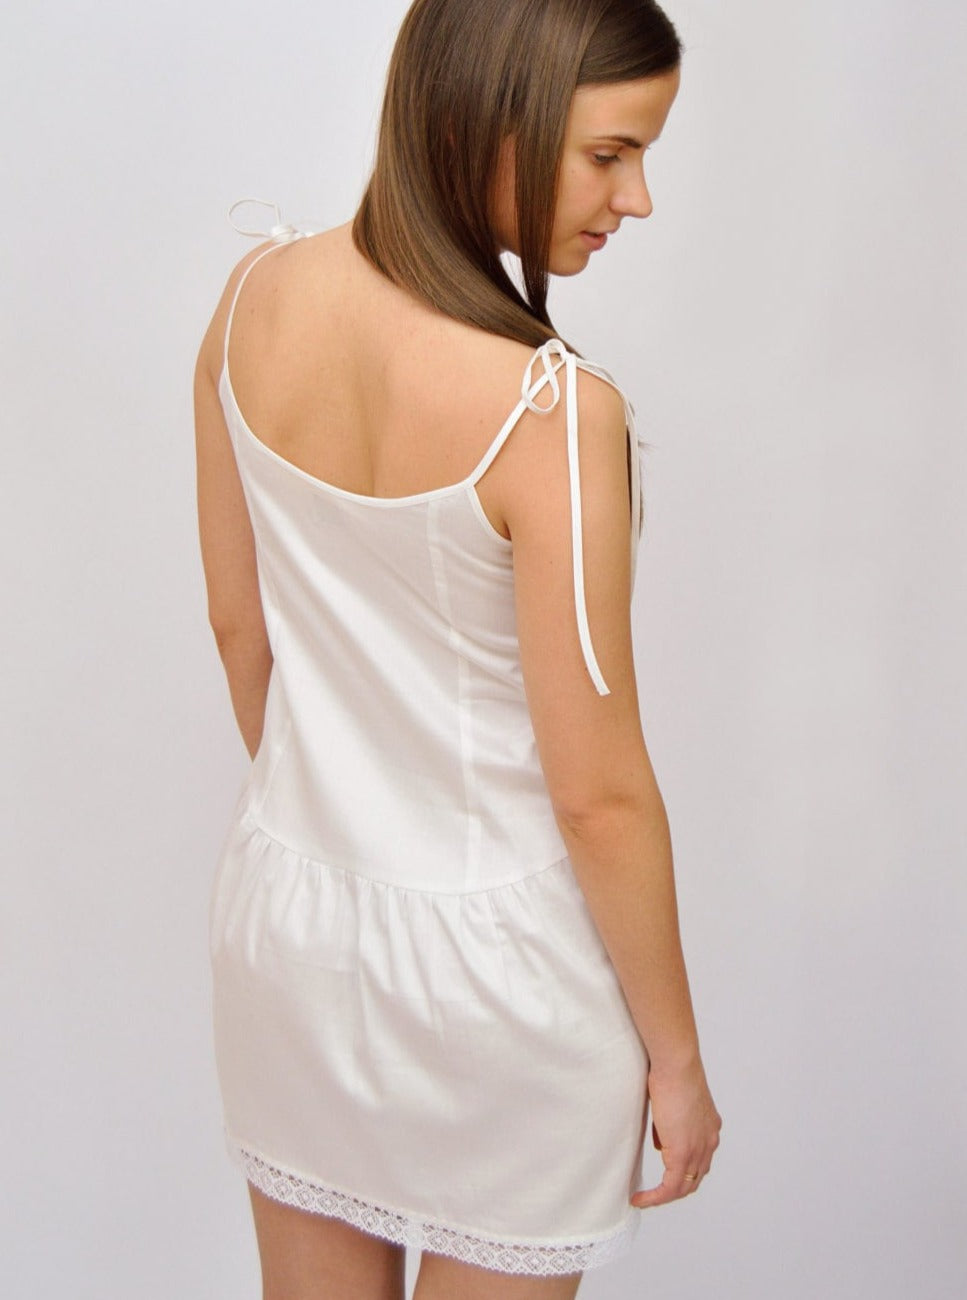 Tiara's Night Slip Dress in White Cotton Sateen